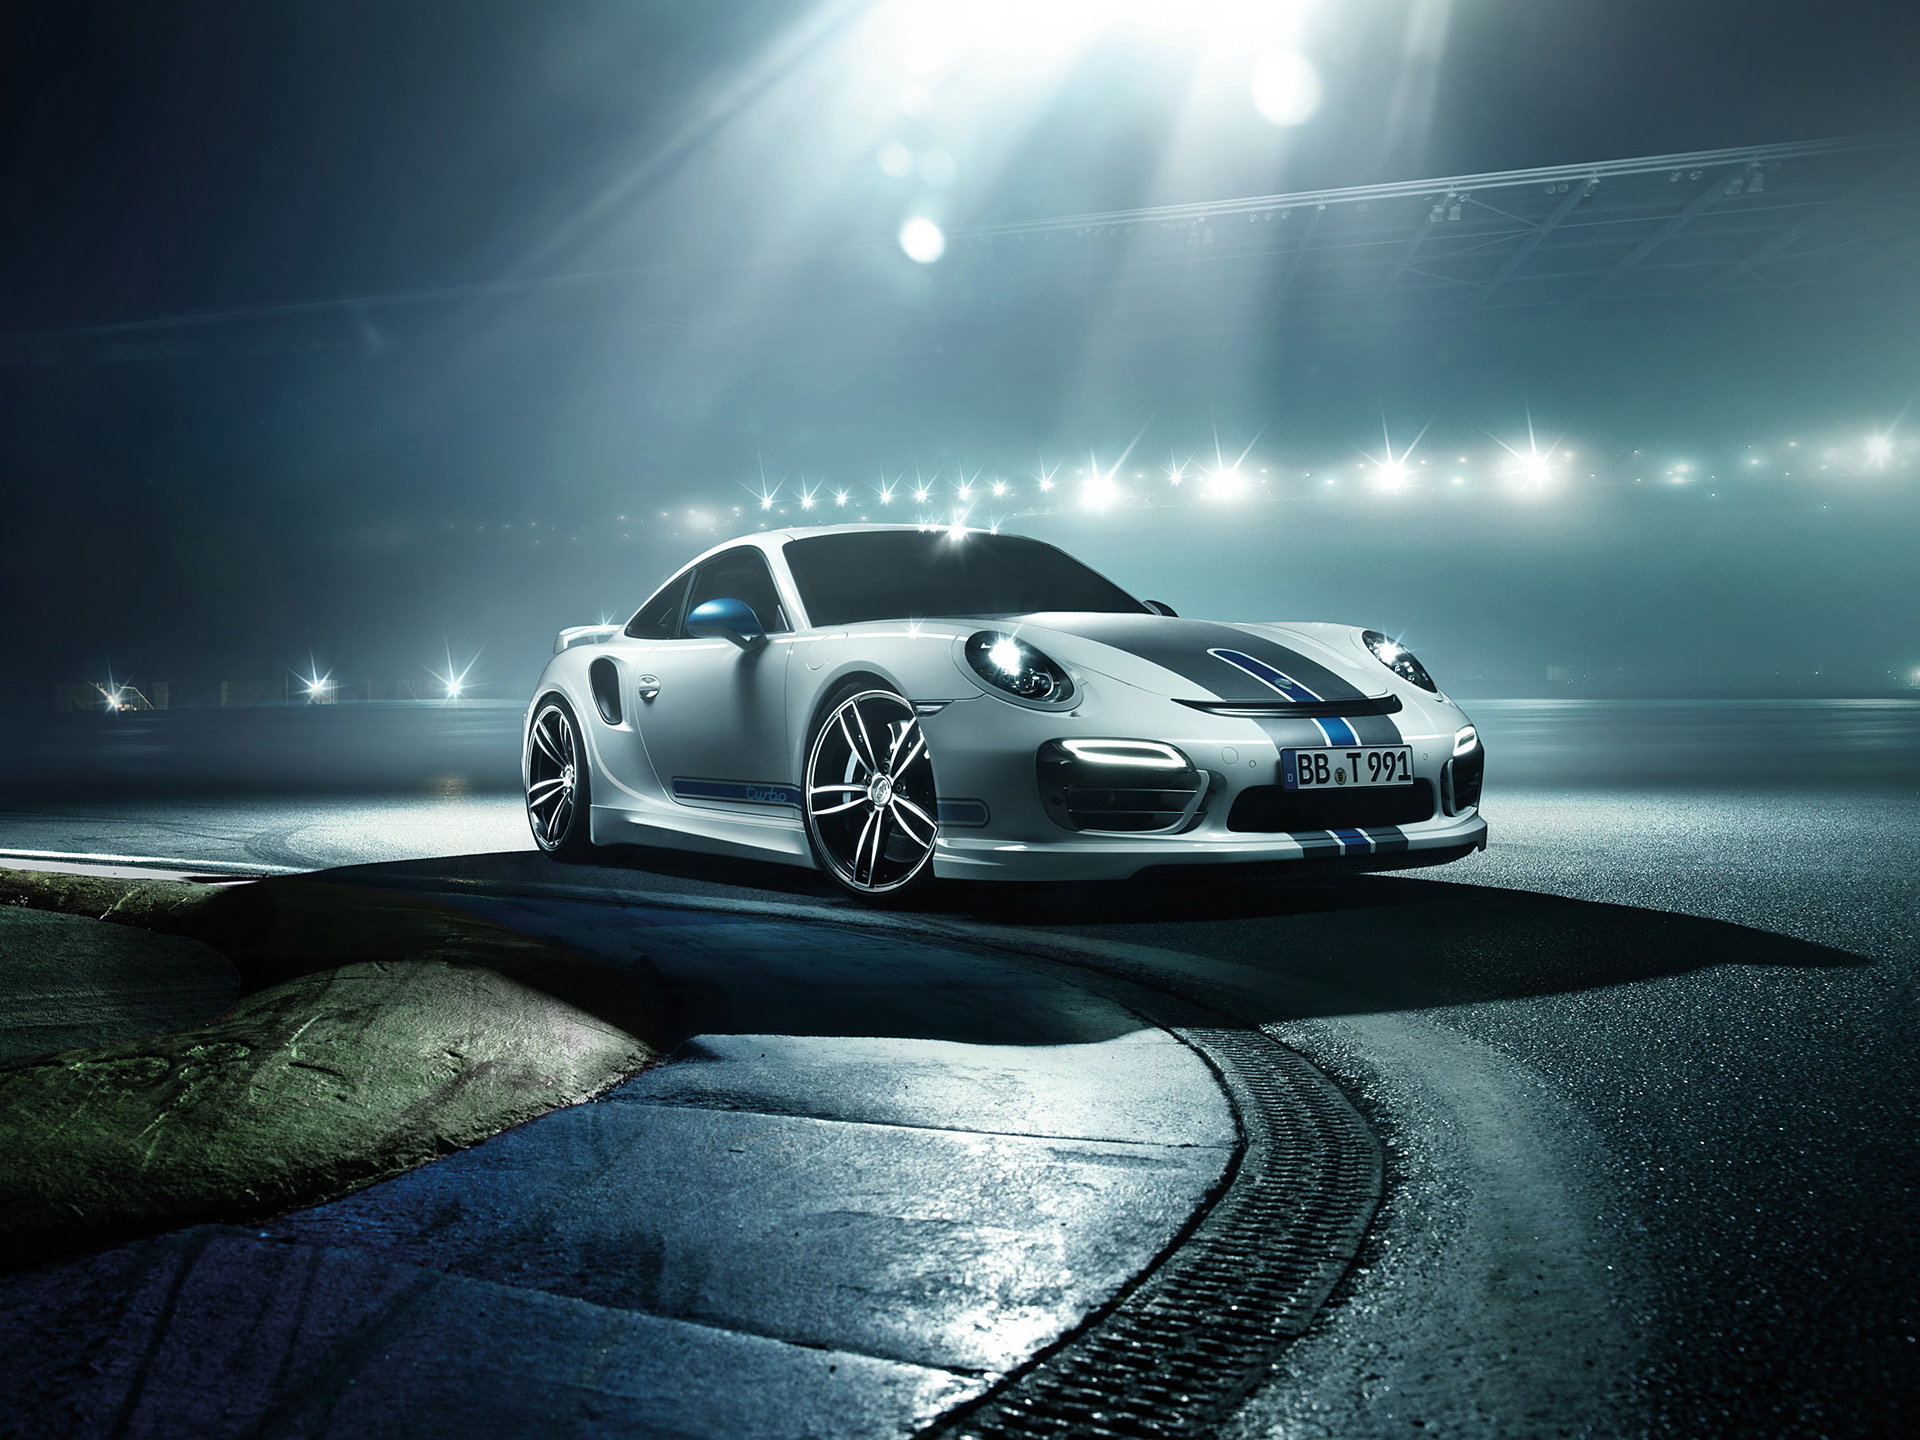  2014 TechArt Porsche 911 Turbo Wallpaper.